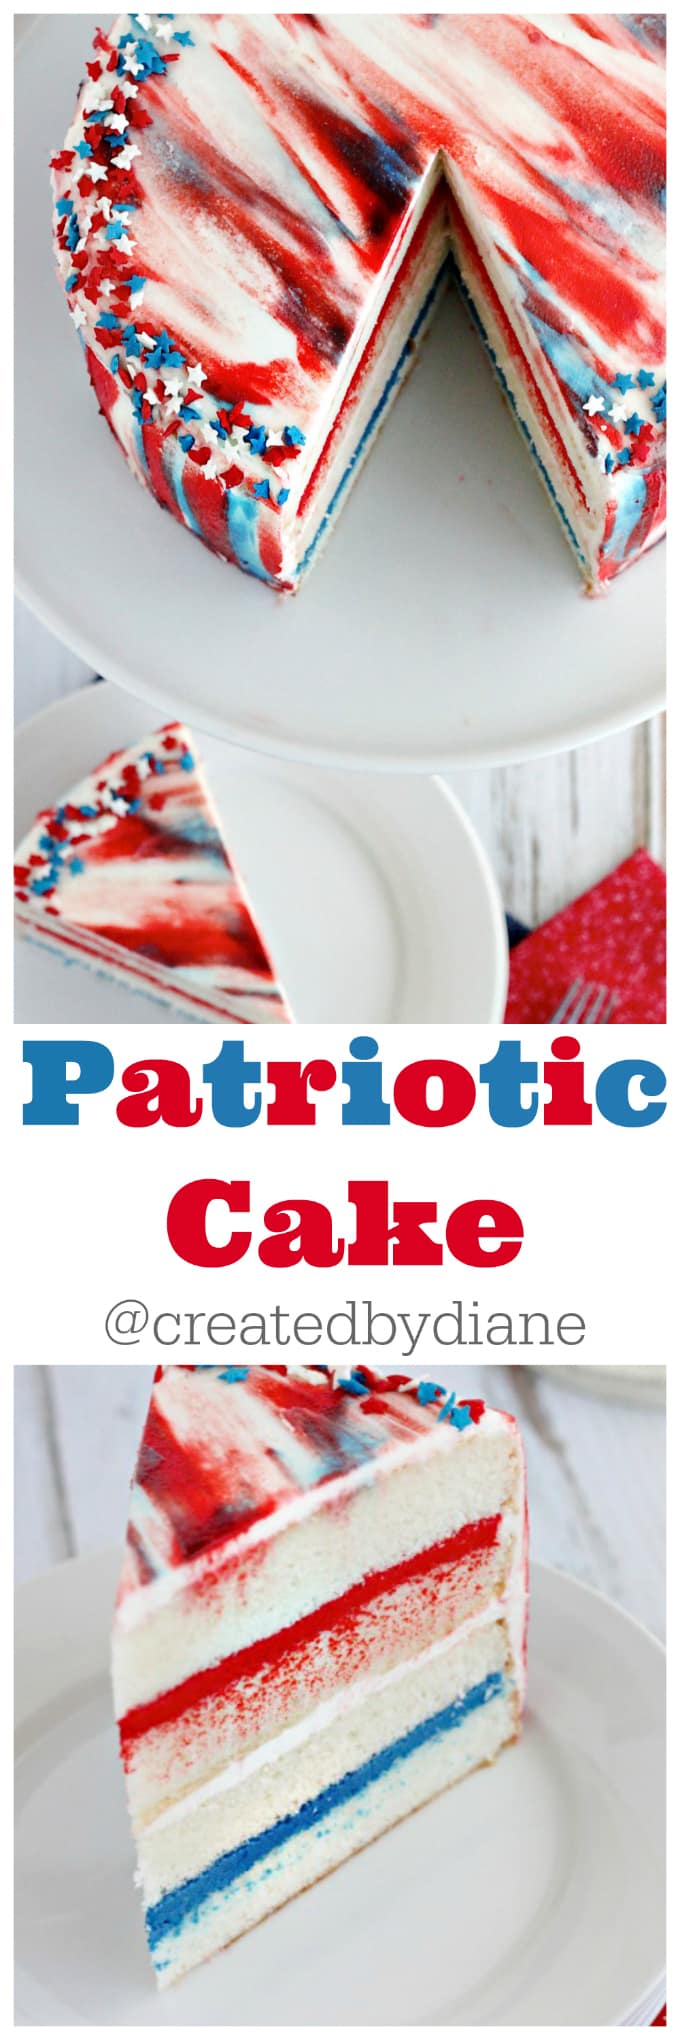 patriotic cake @createdbydiane